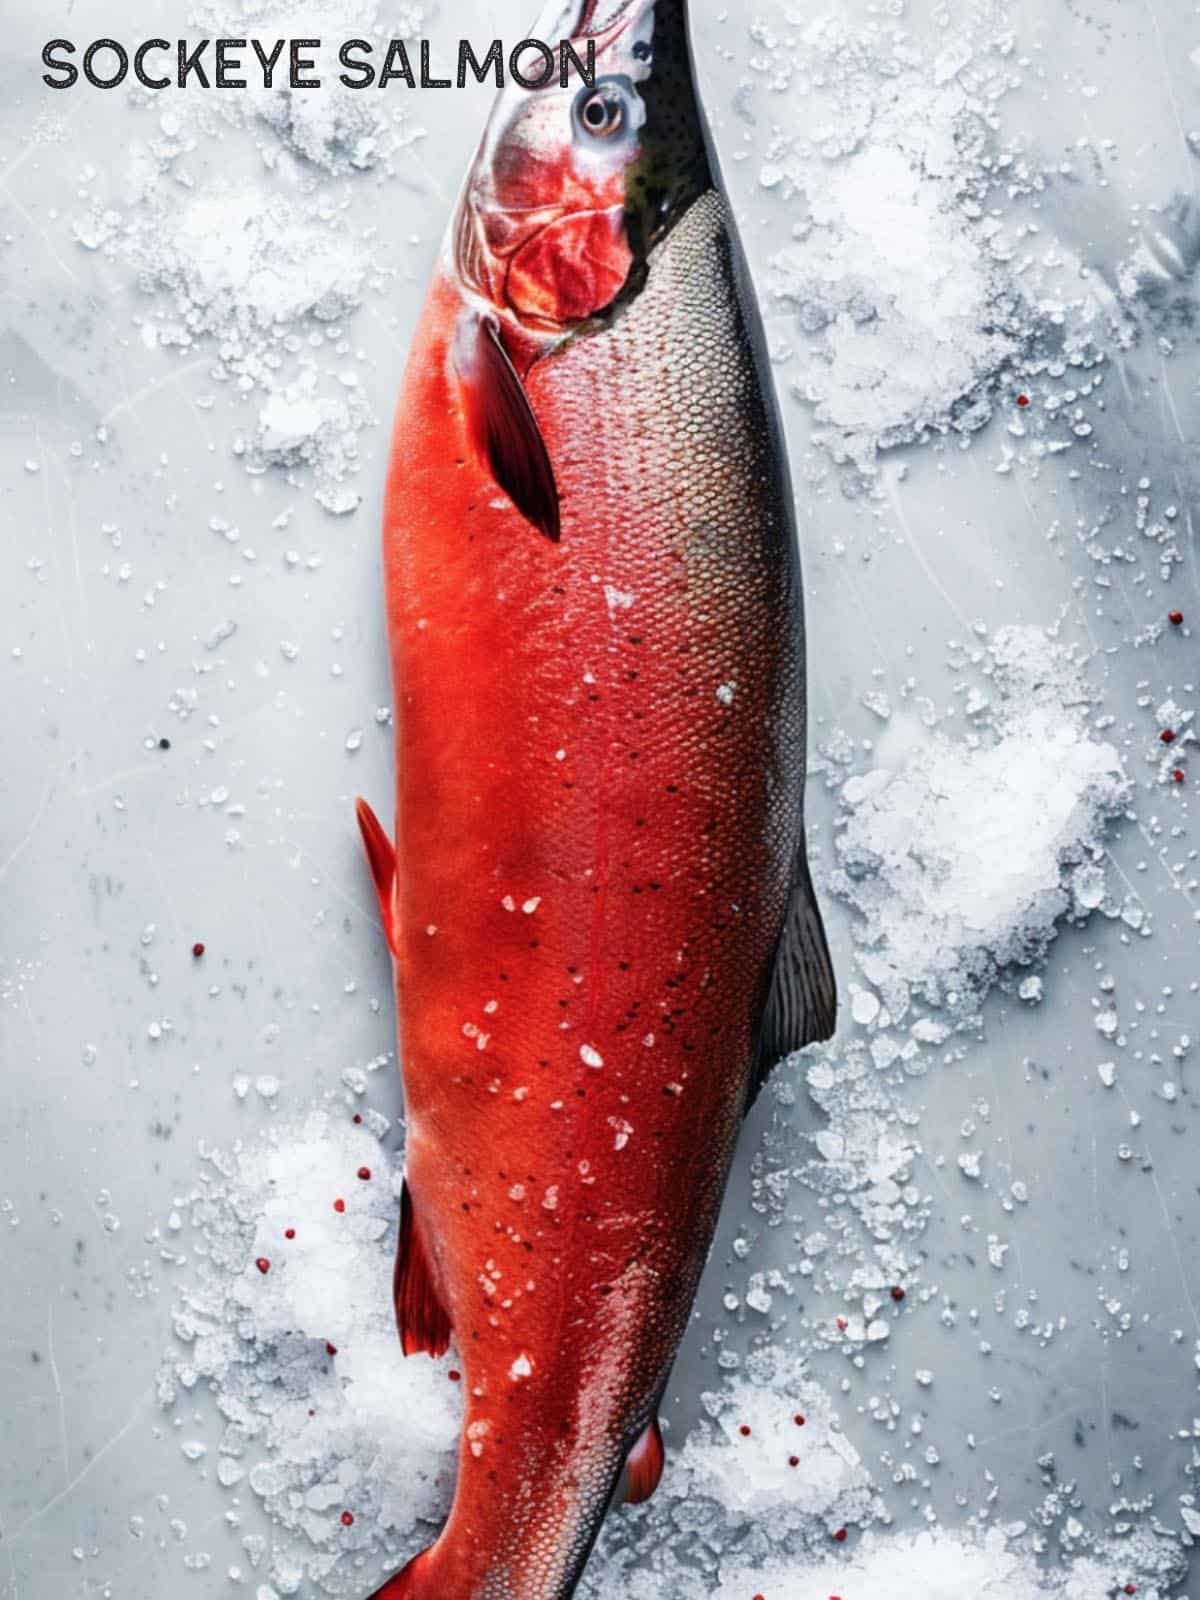 Sockeye Salmon with its distinctive deep red flesh